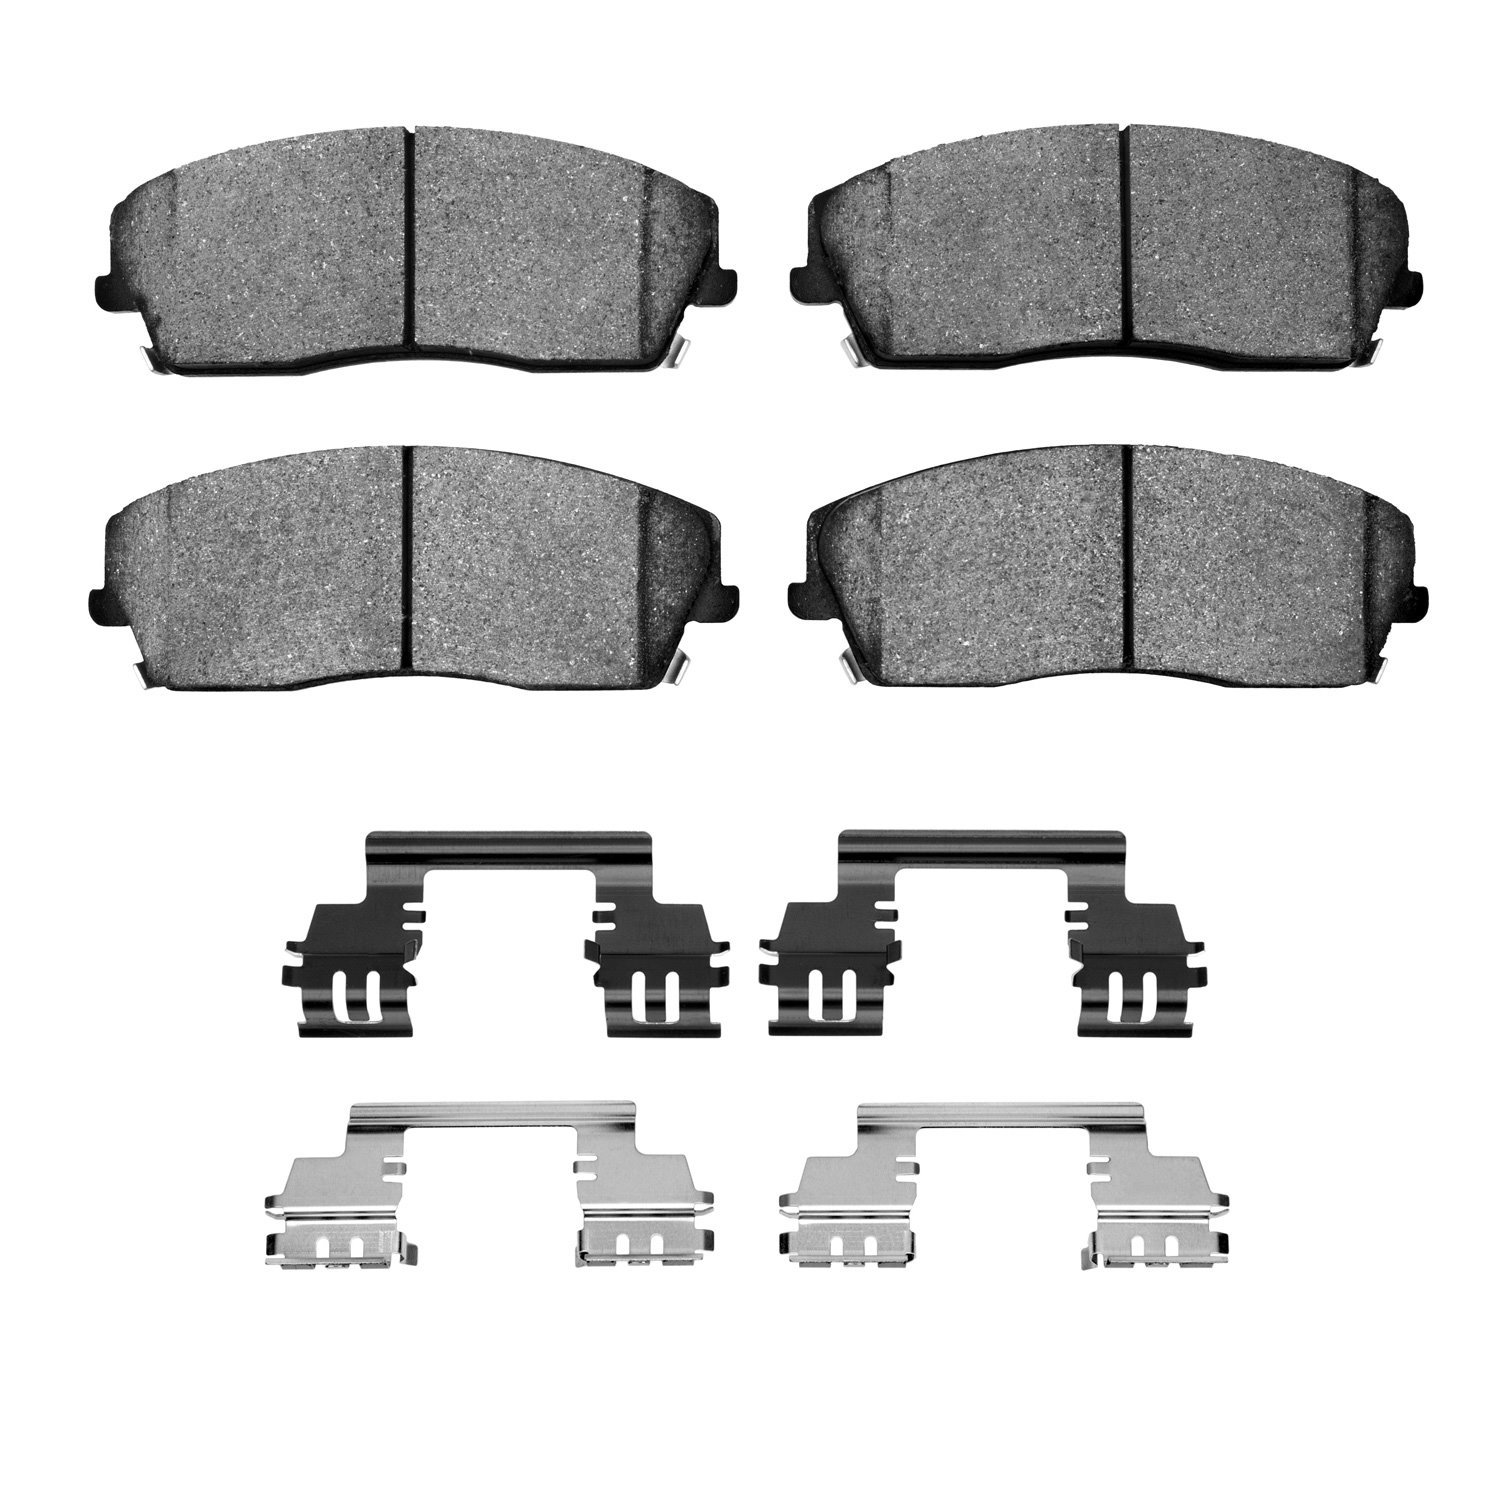 1310-1056-01 3000-Series Ceramic Brake Pads & Hardware Kit, Fits Select Mopar, Position: Front